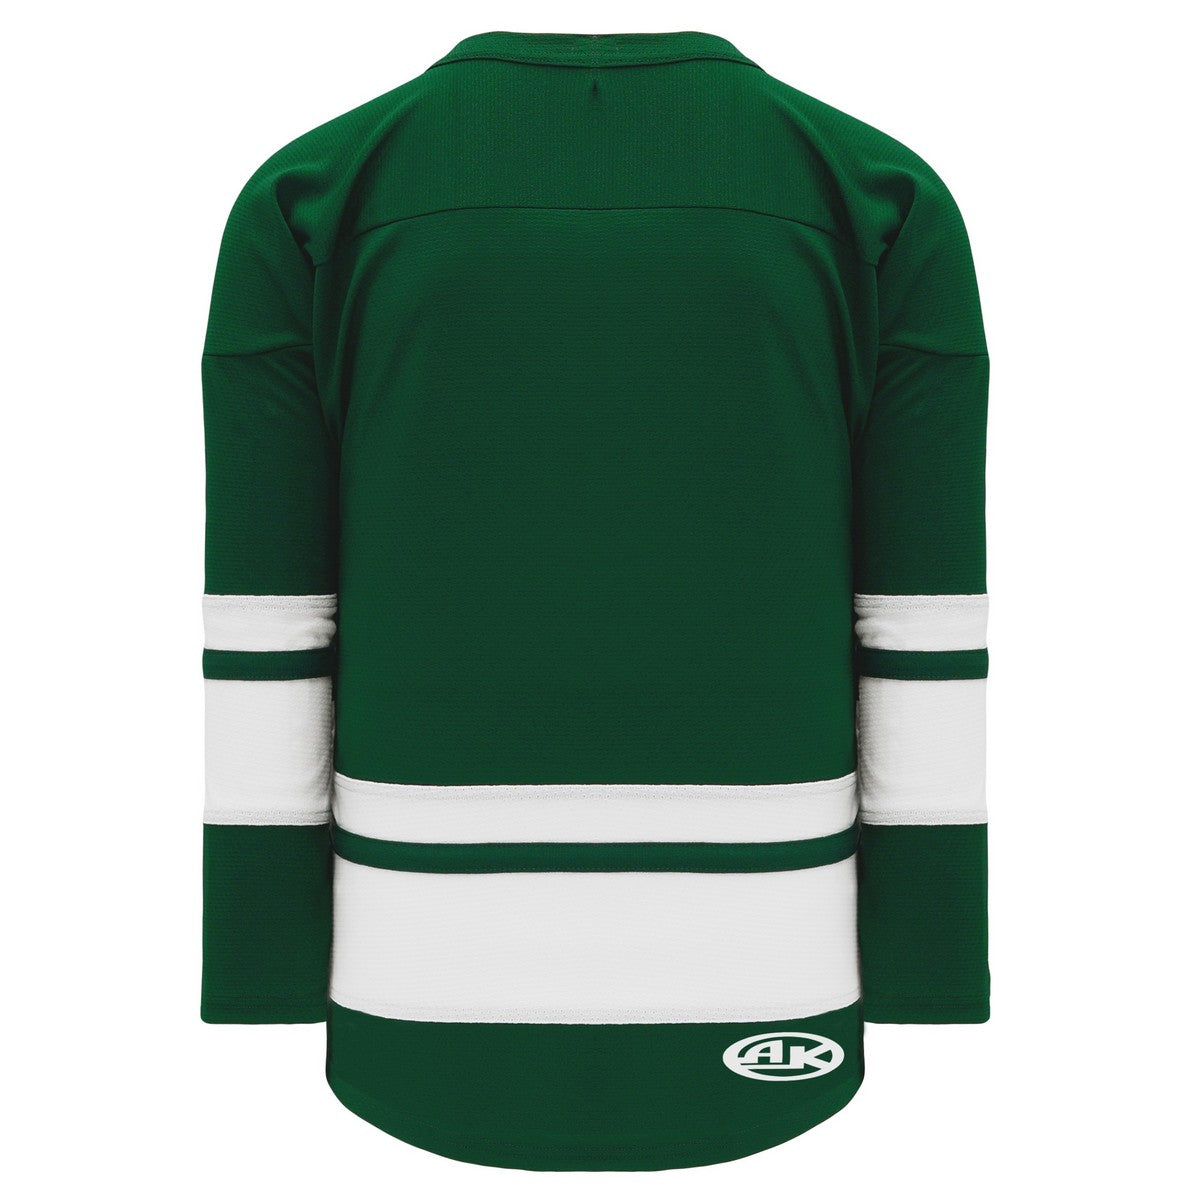 League Series H6400 Jersey Green-White